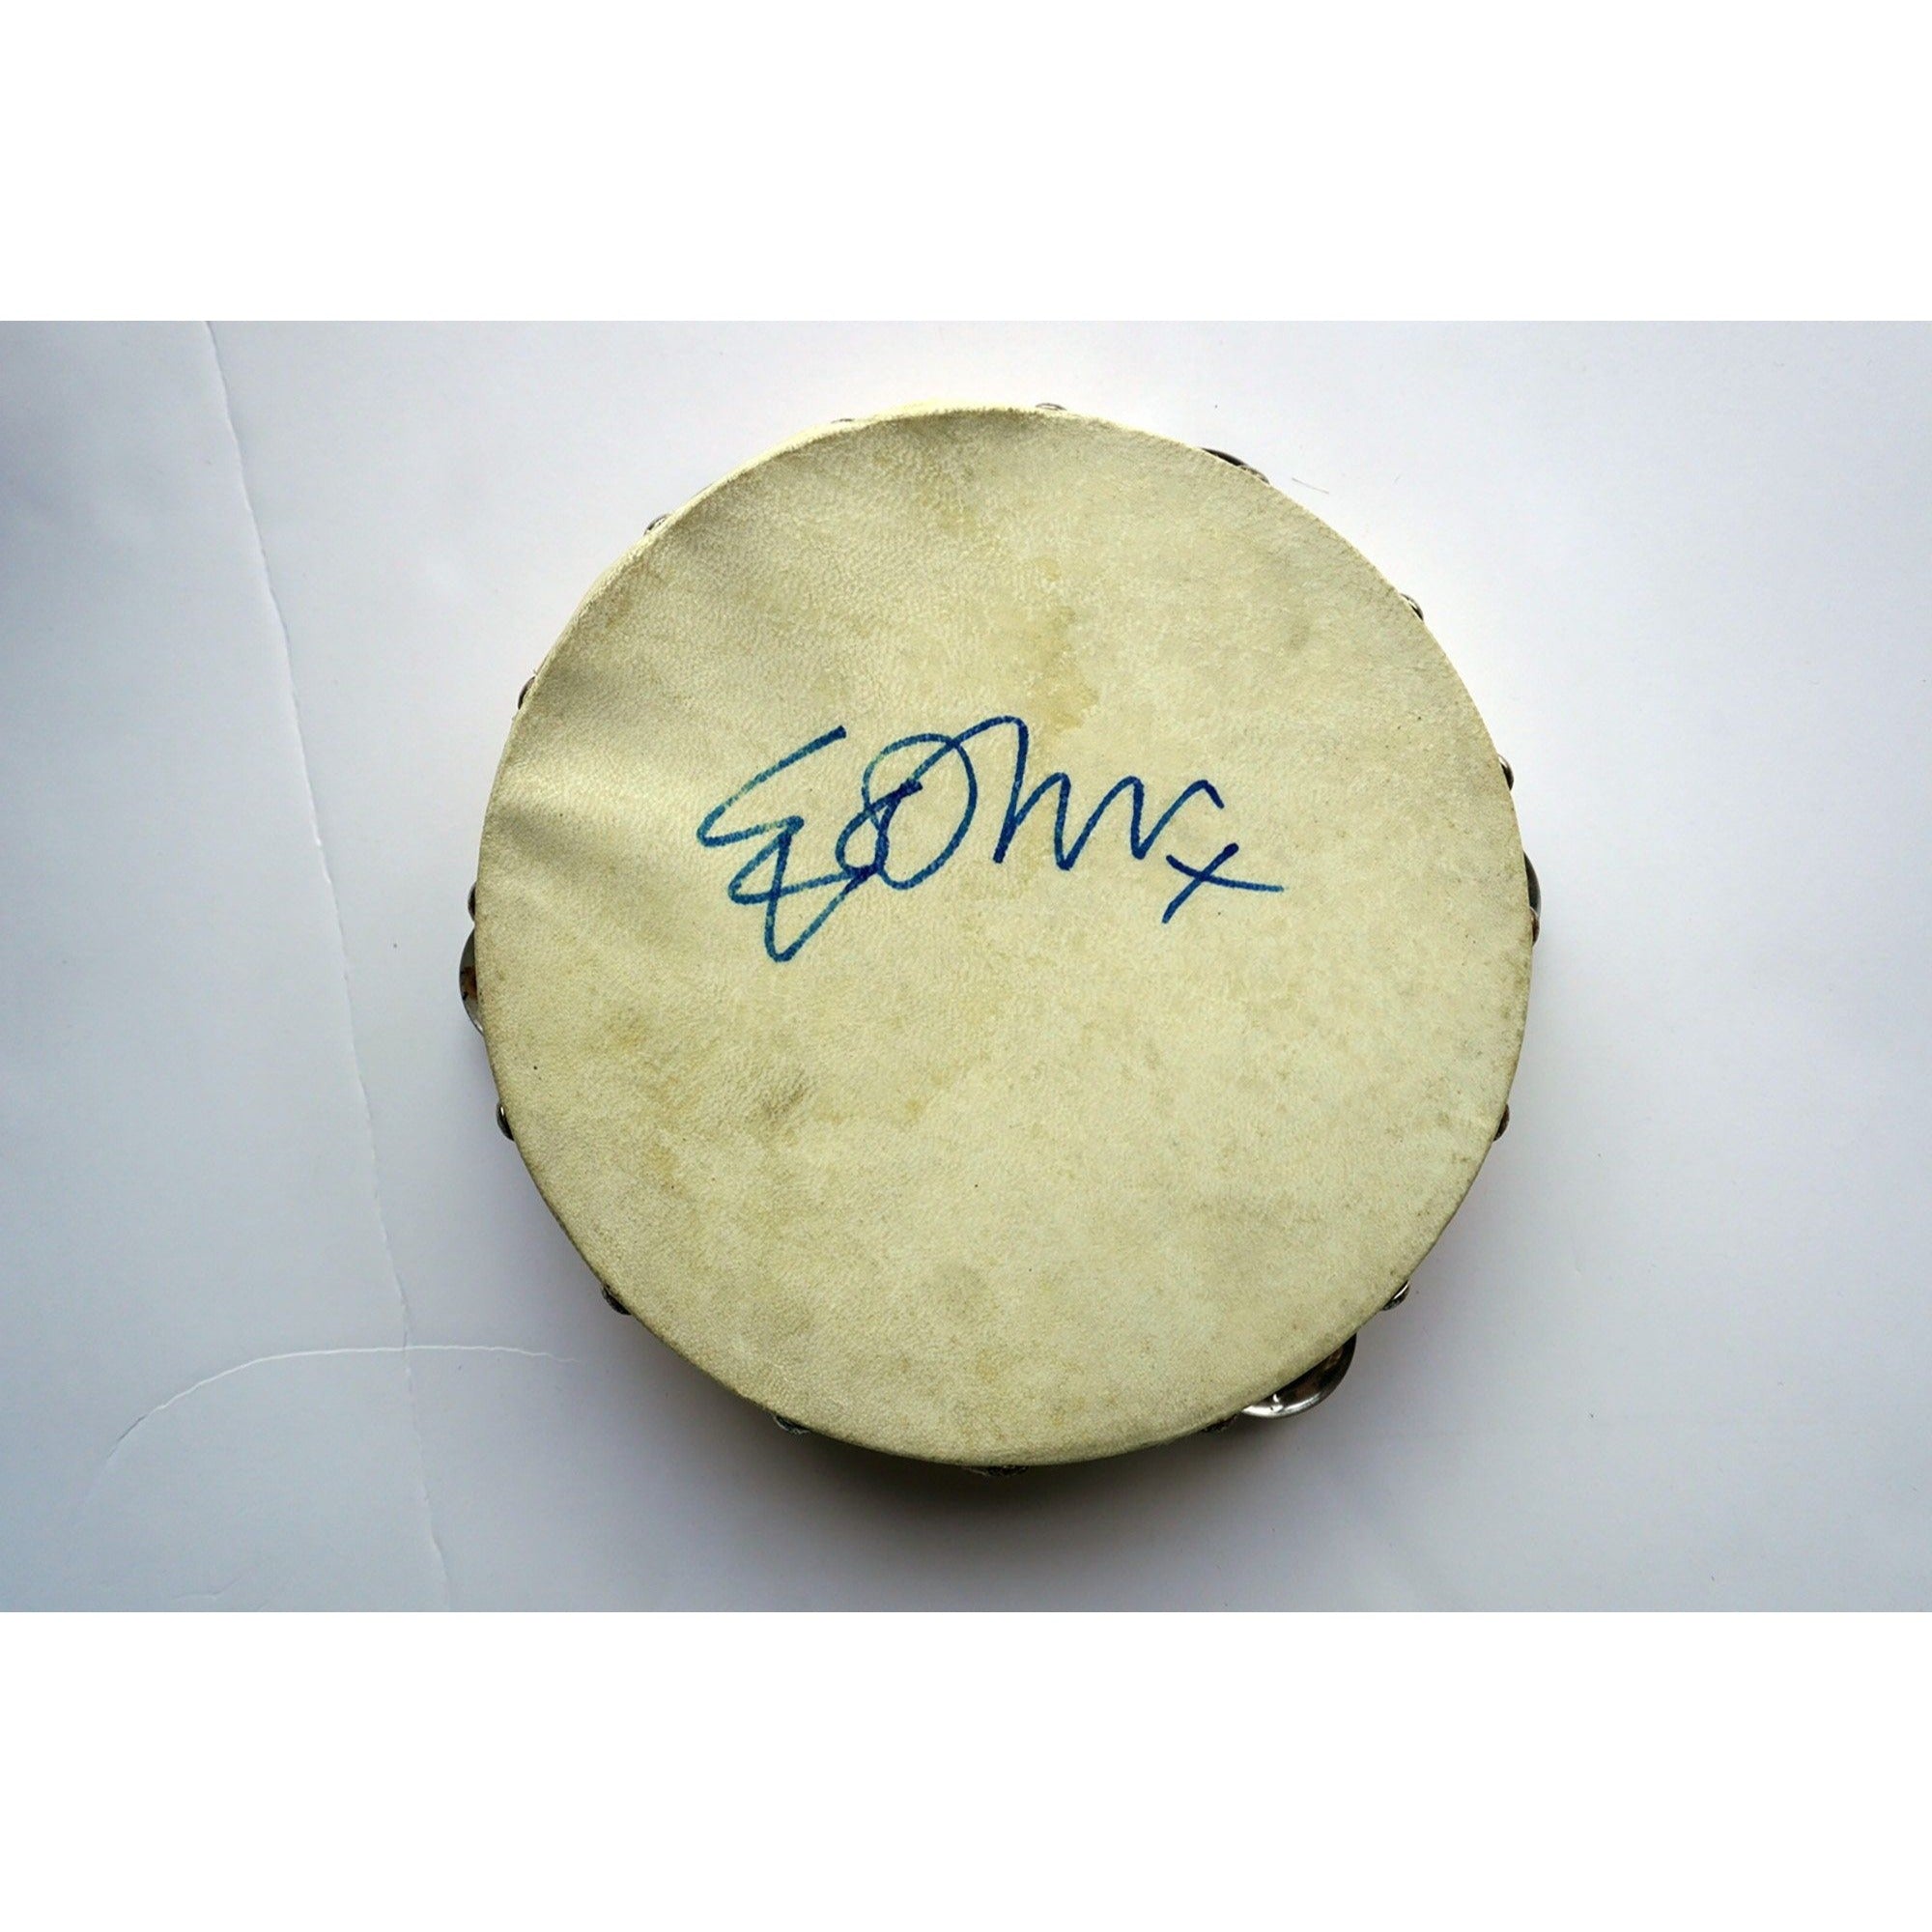 Ed Sheeran signed tambourine with proof